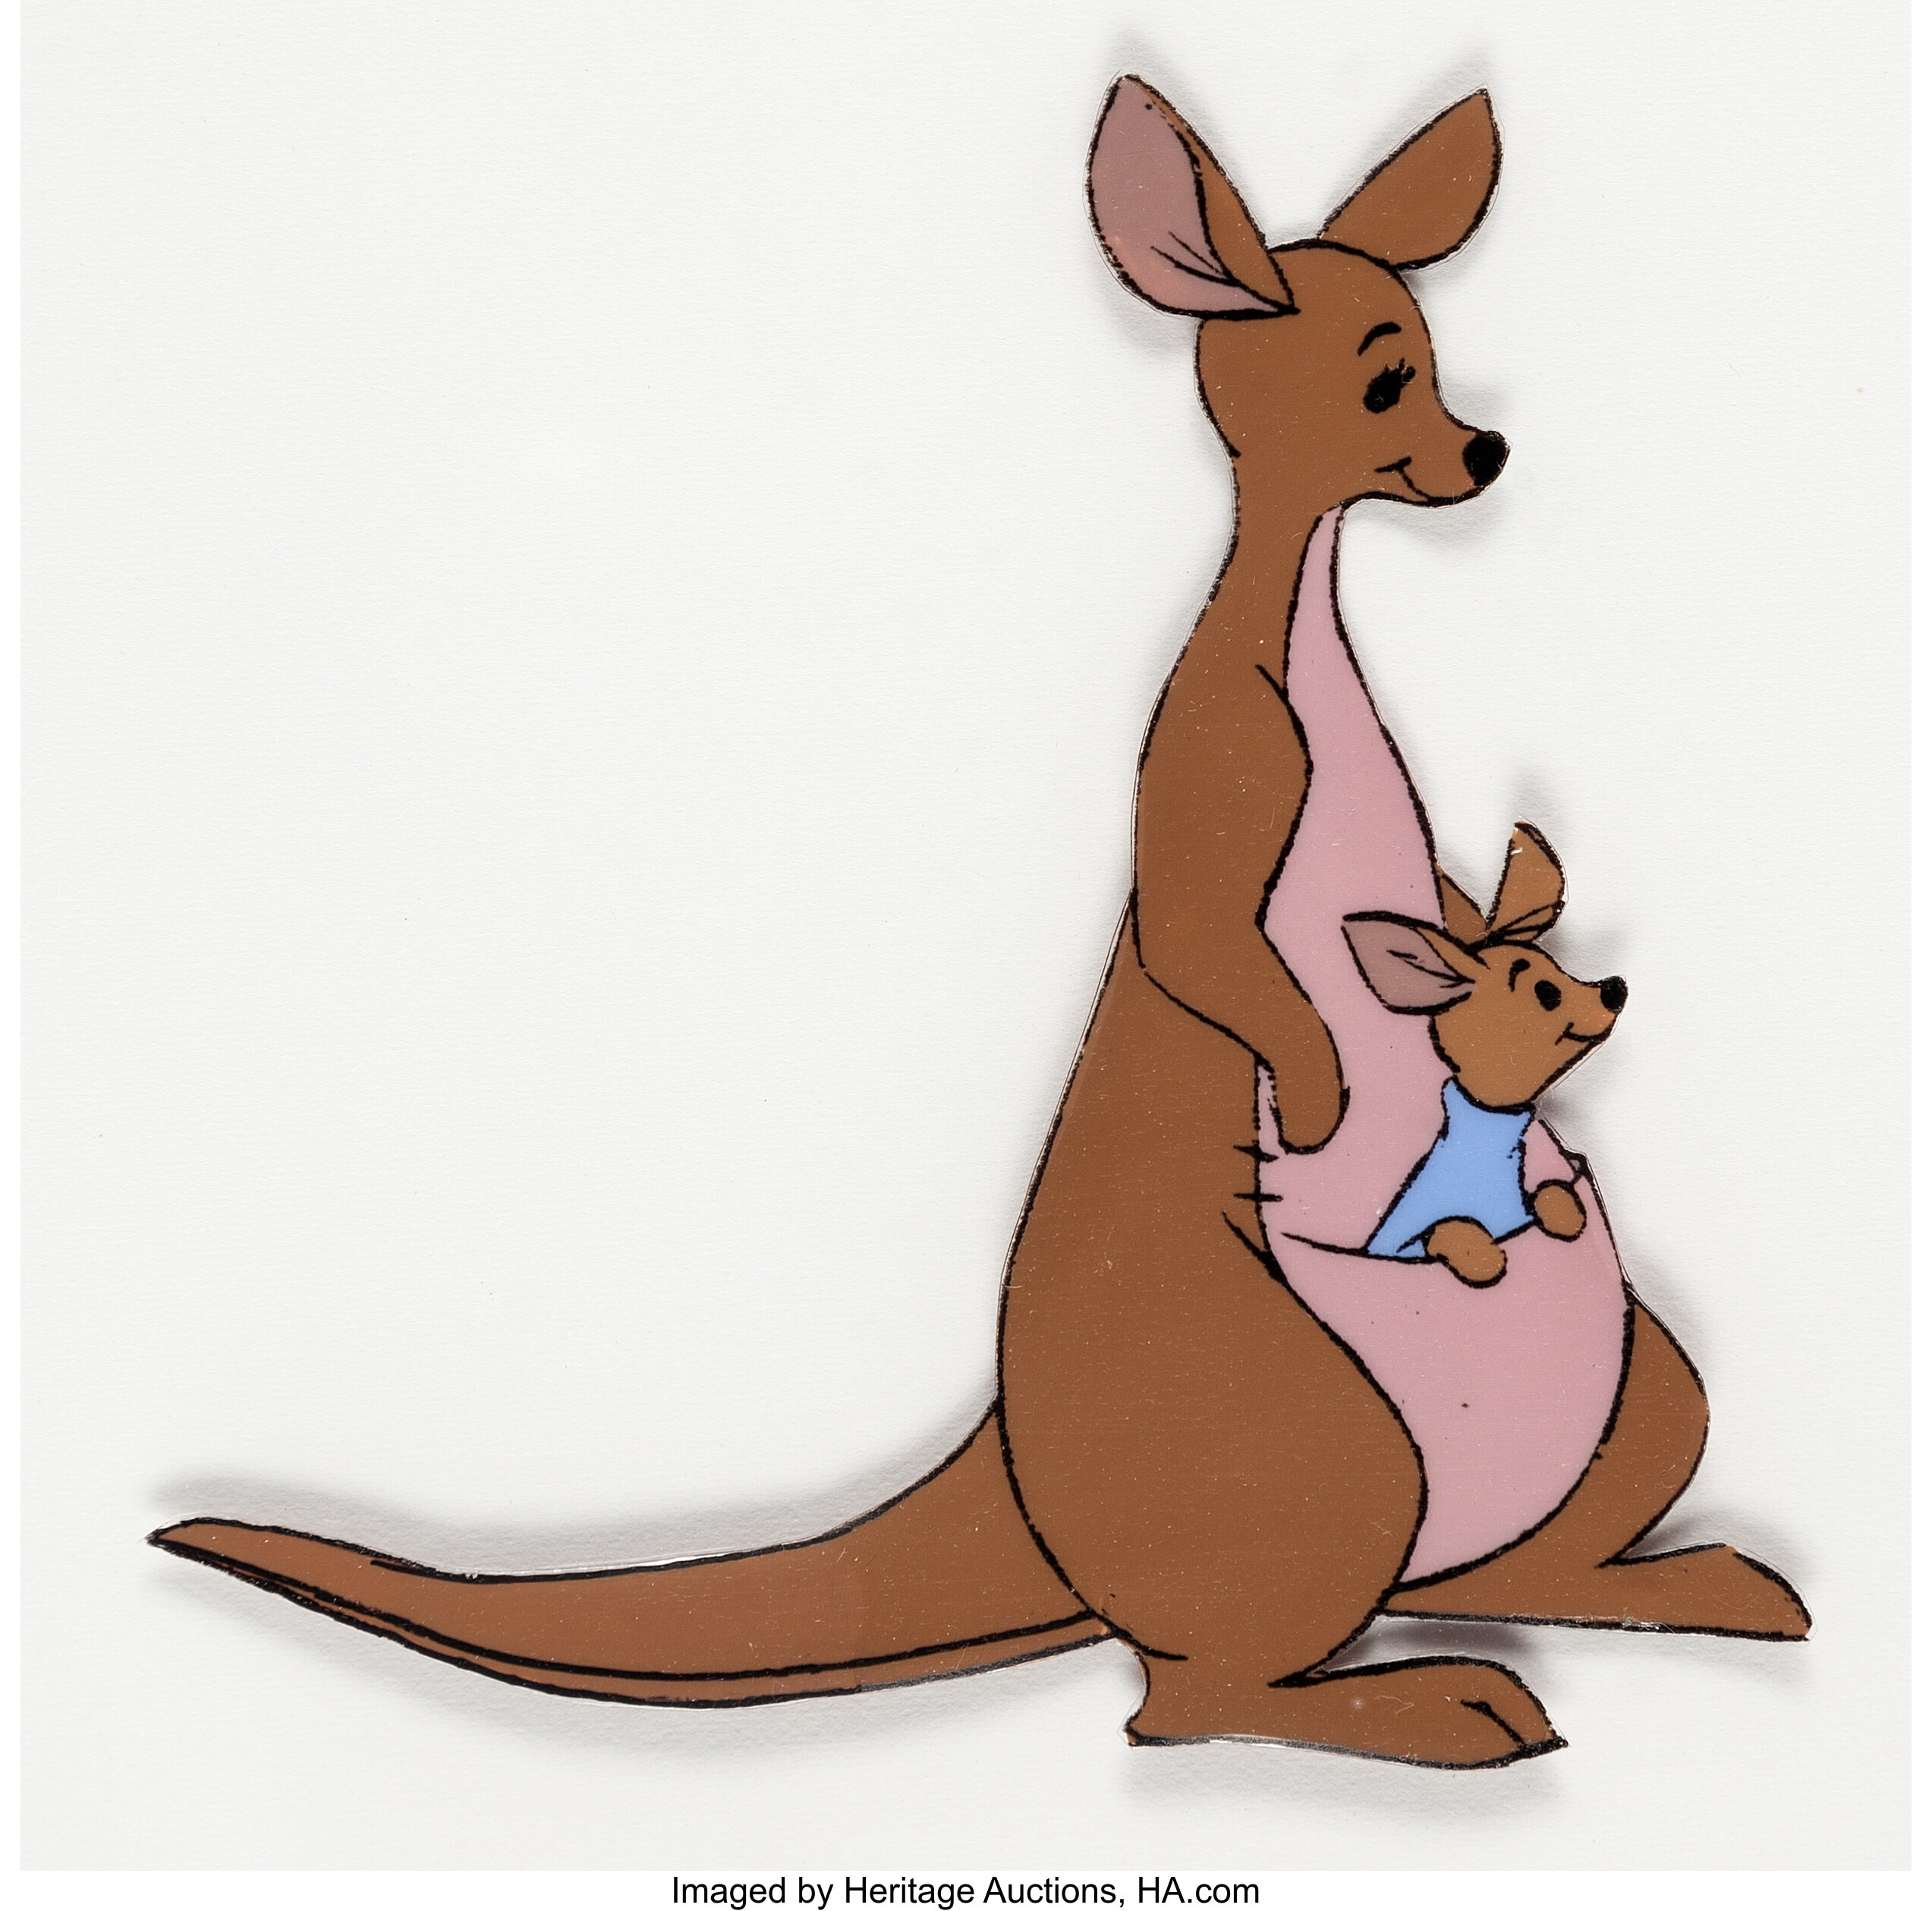 kangaroo winnie the pooh